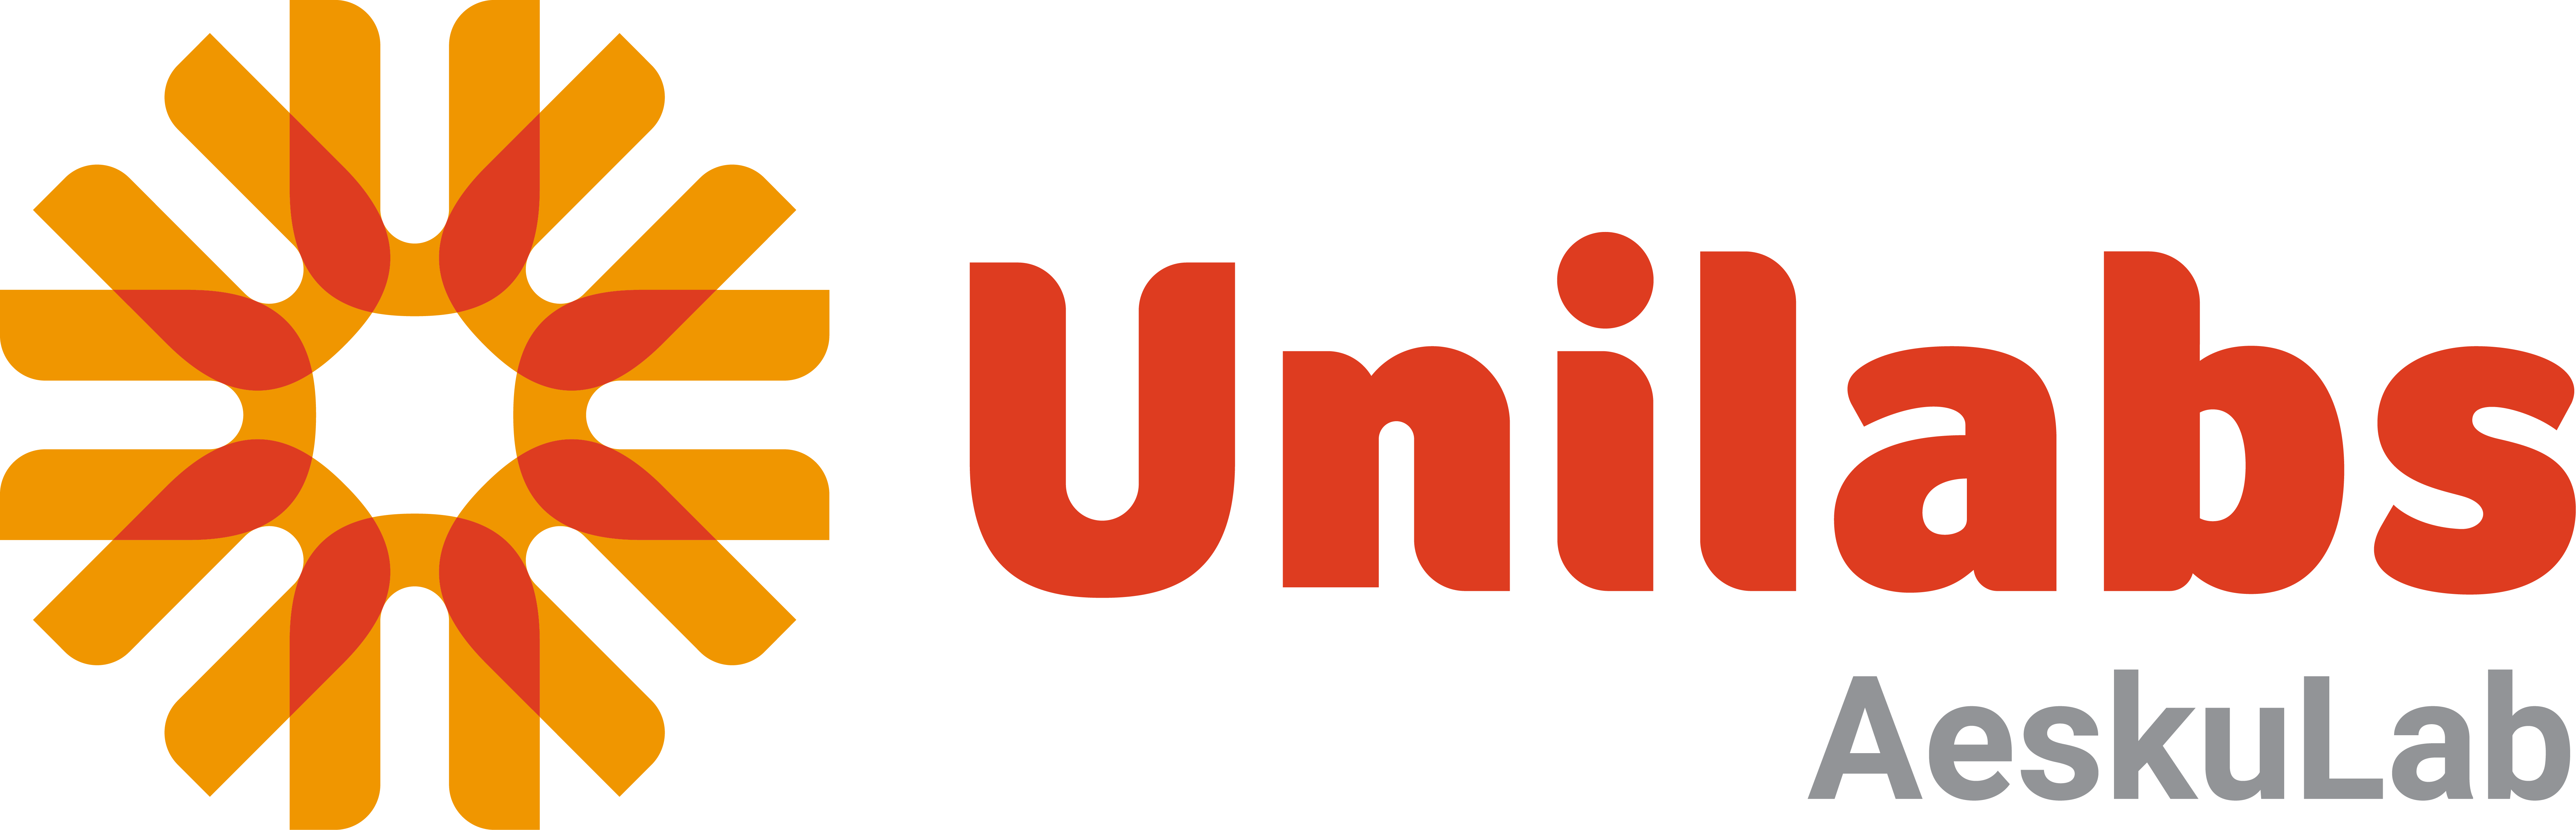 Unilabs Logo